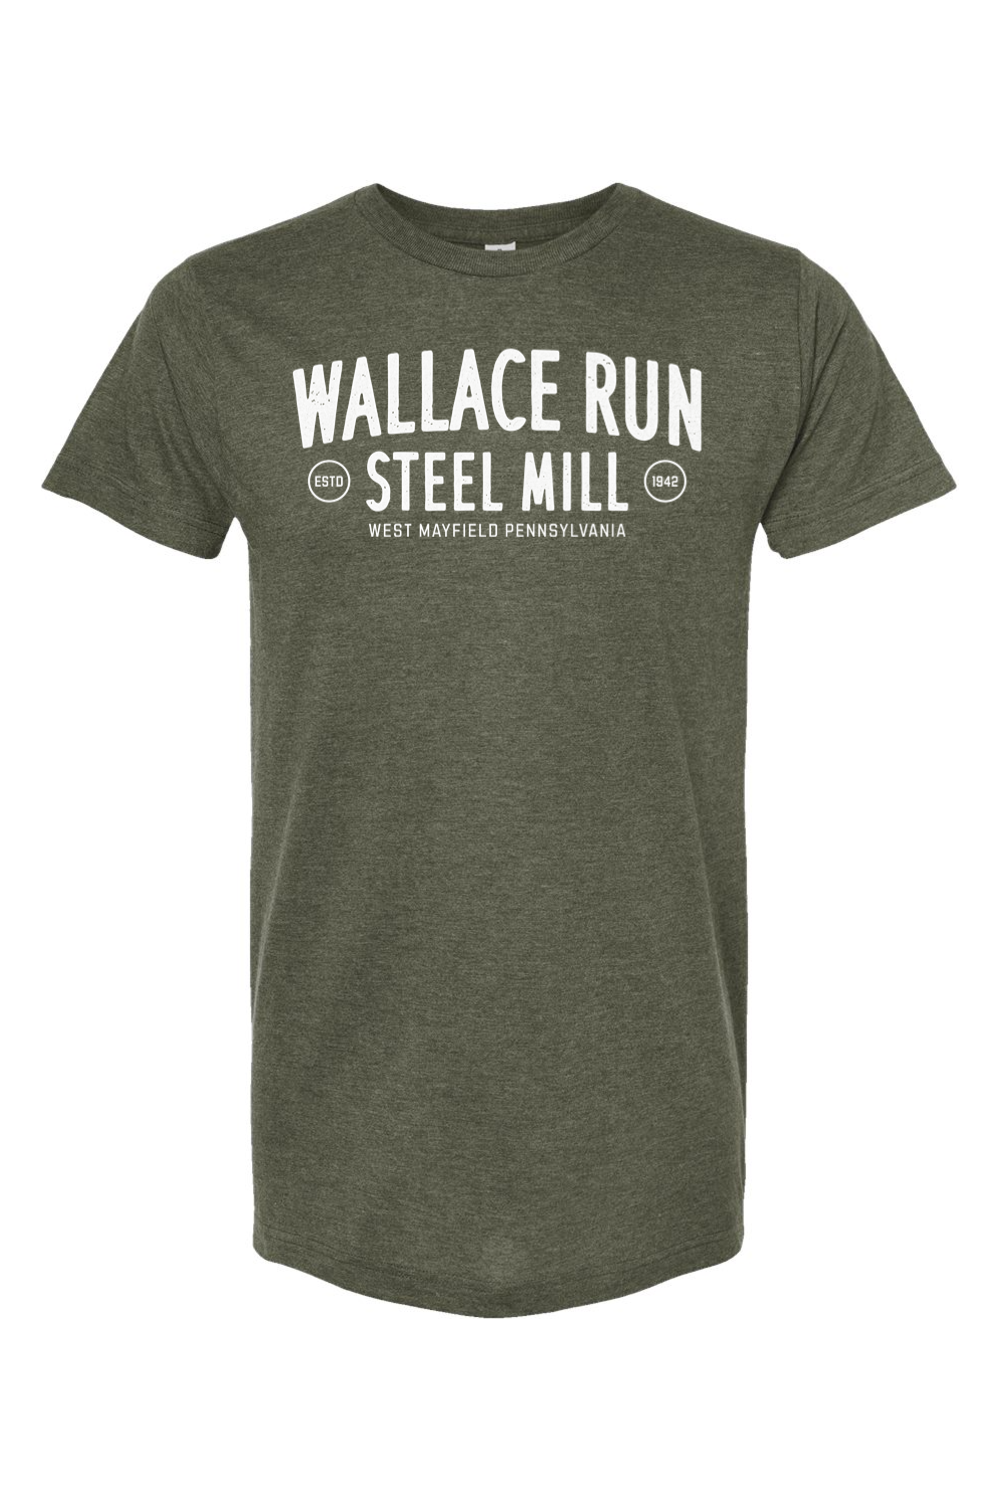 Wallace Run Steel Mill - West Mayfield - Beaver County - Yinzylvania